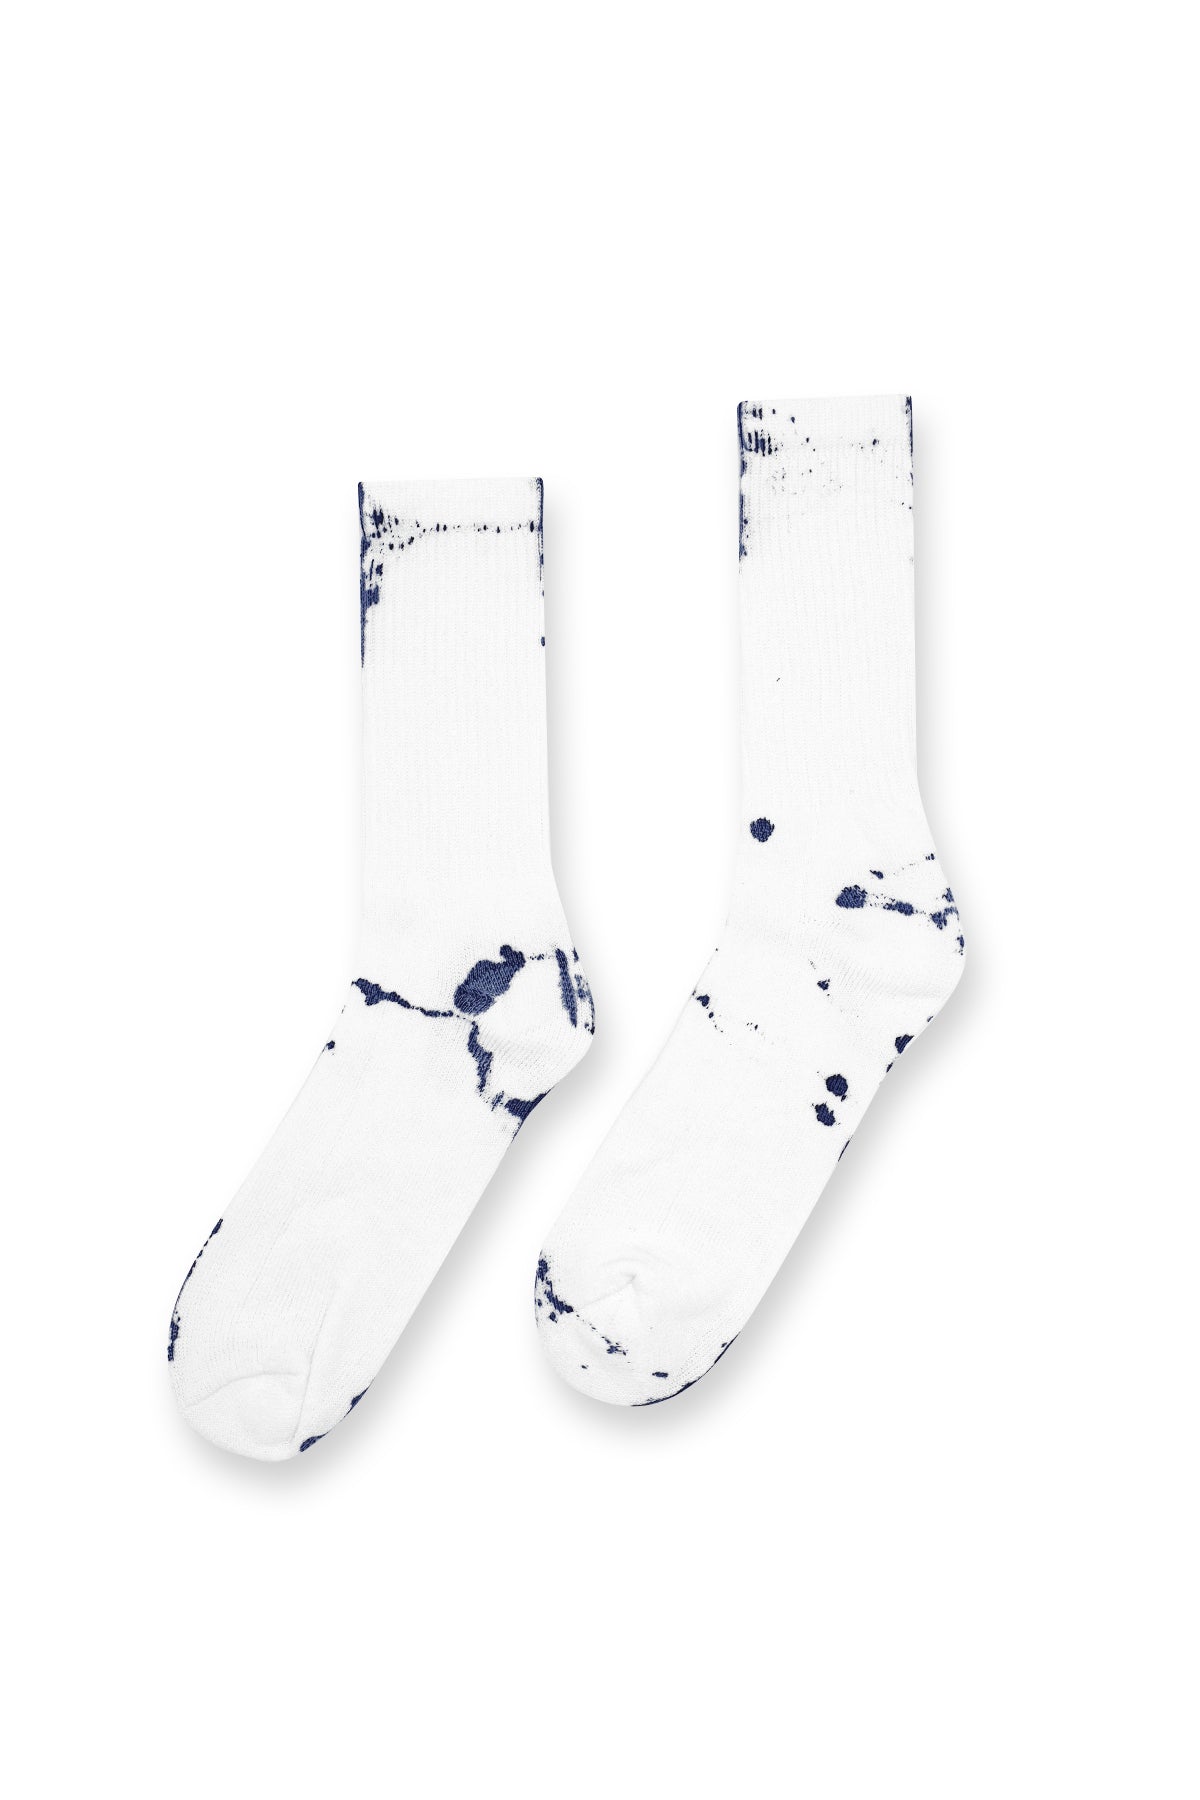 Men’s Crew Socks - White with Navy Tie-Dye